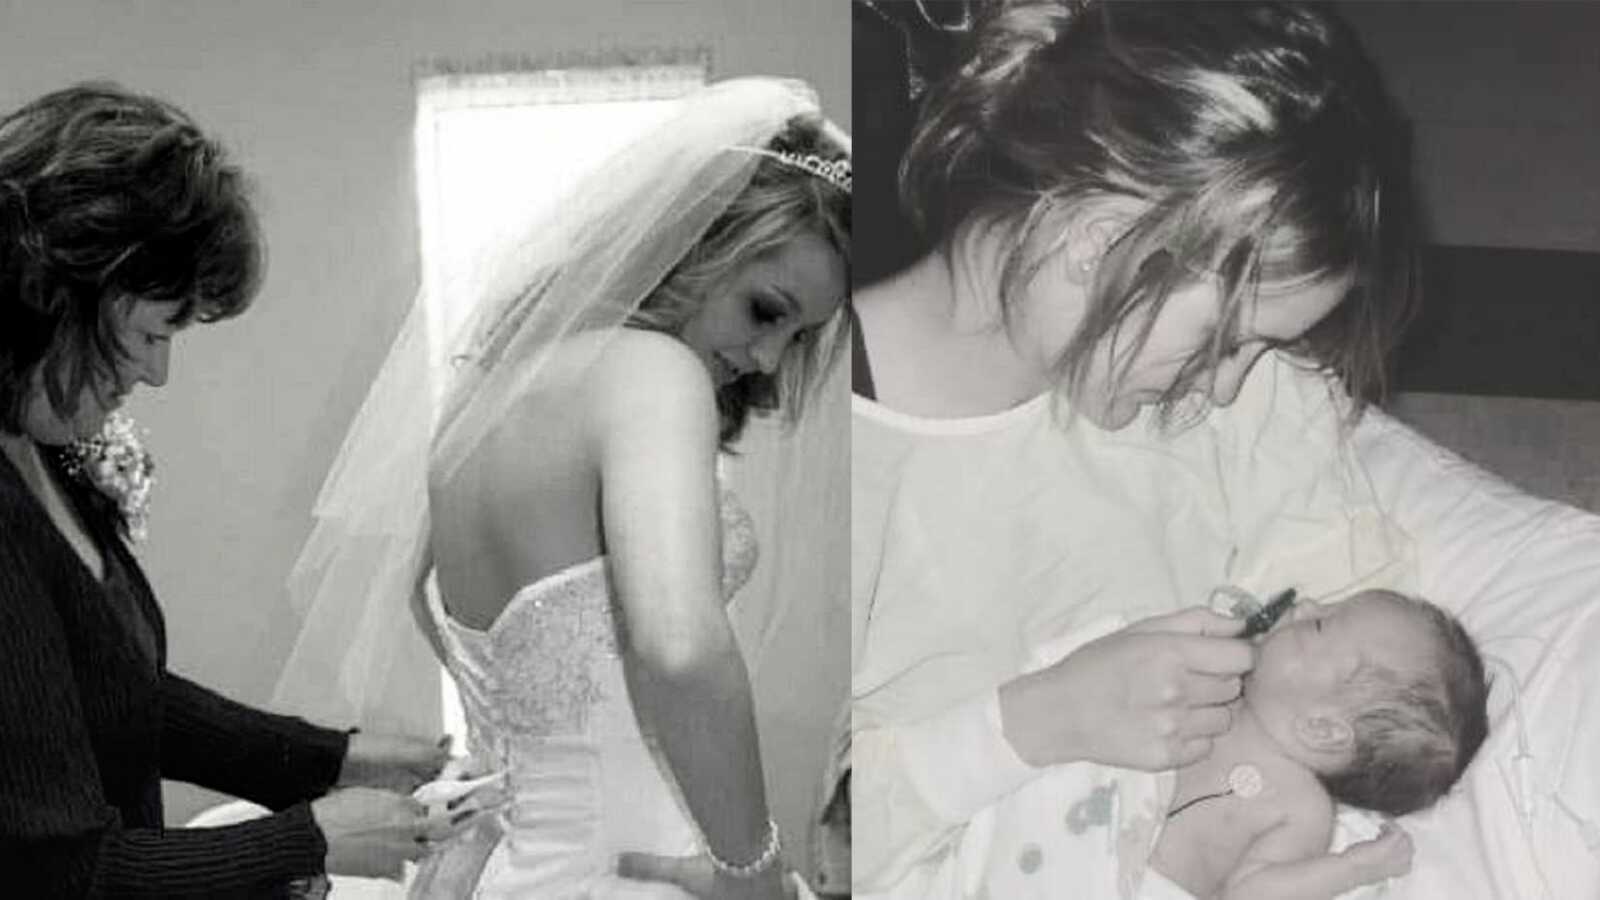 Left: mom tying daughter's wedding dress, Right: mom holding baby